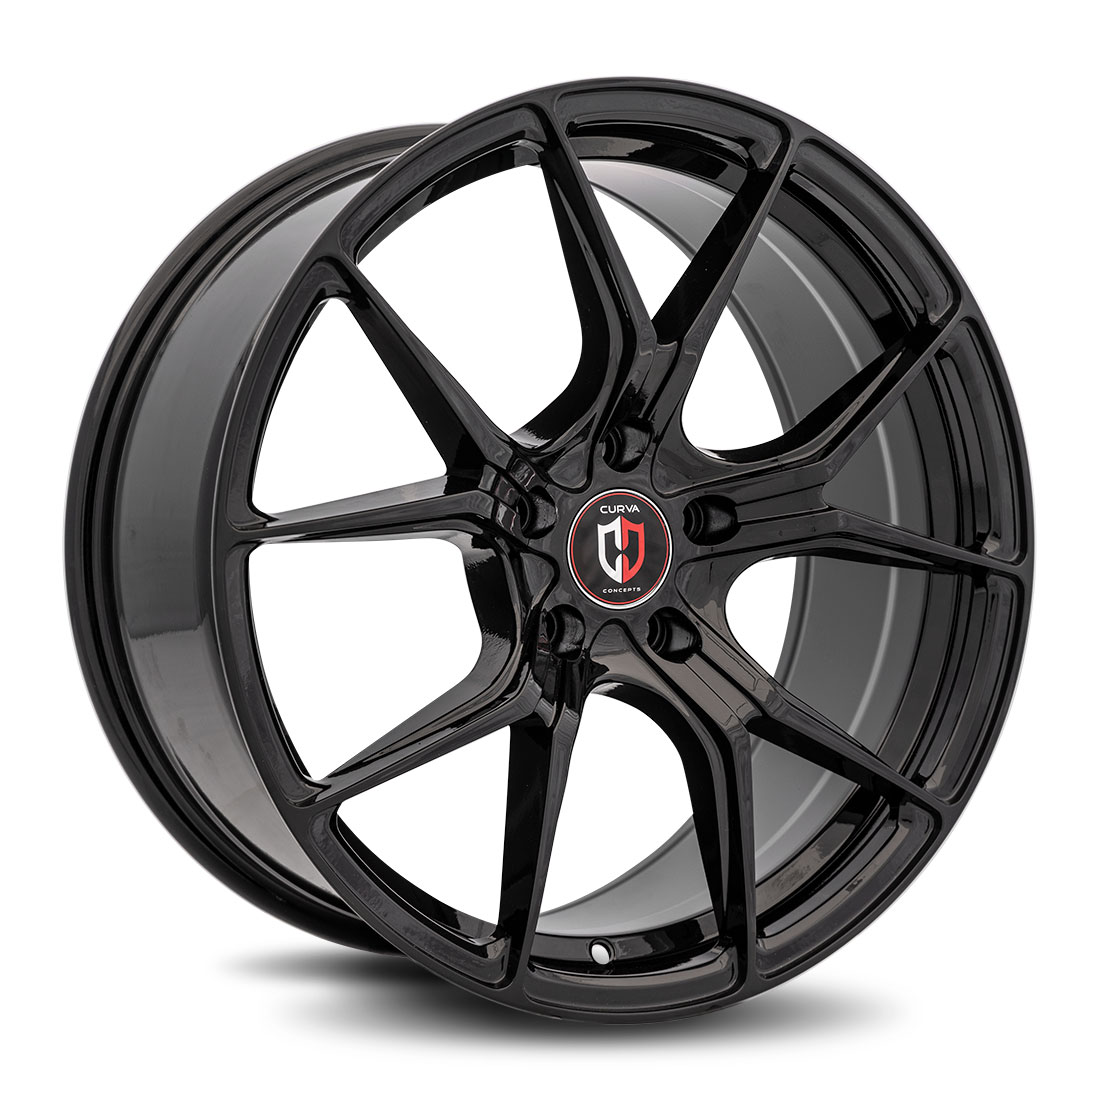 Curva Concepts C42 19 Inch Black Aftermarket Wheels